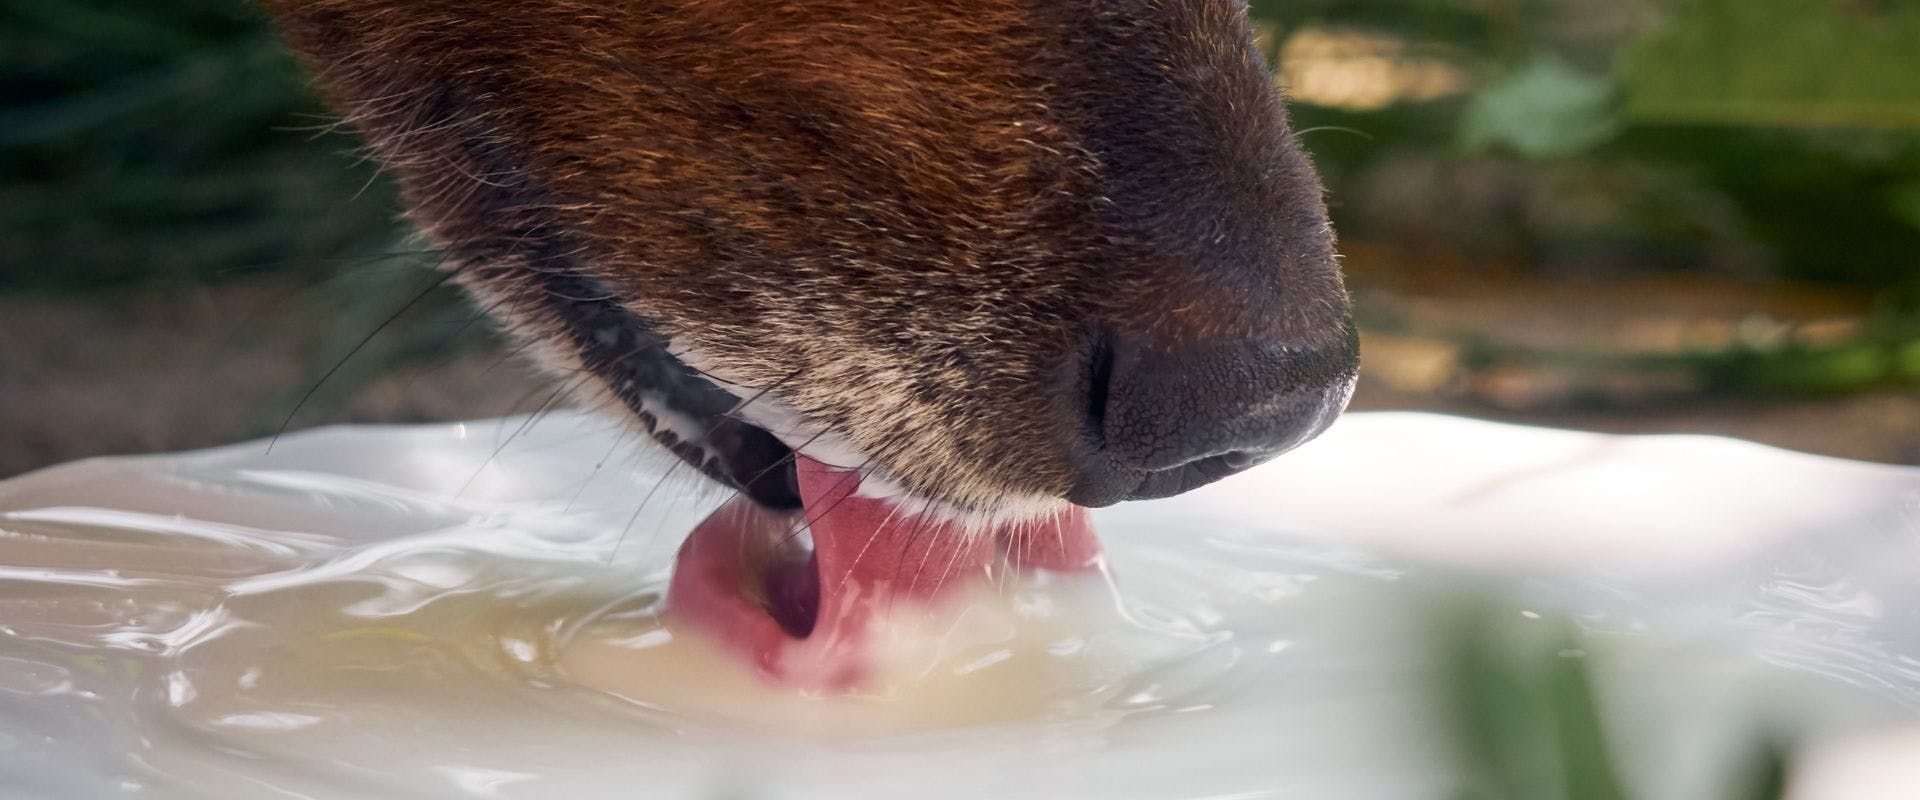 Close-up of dog drinking milk